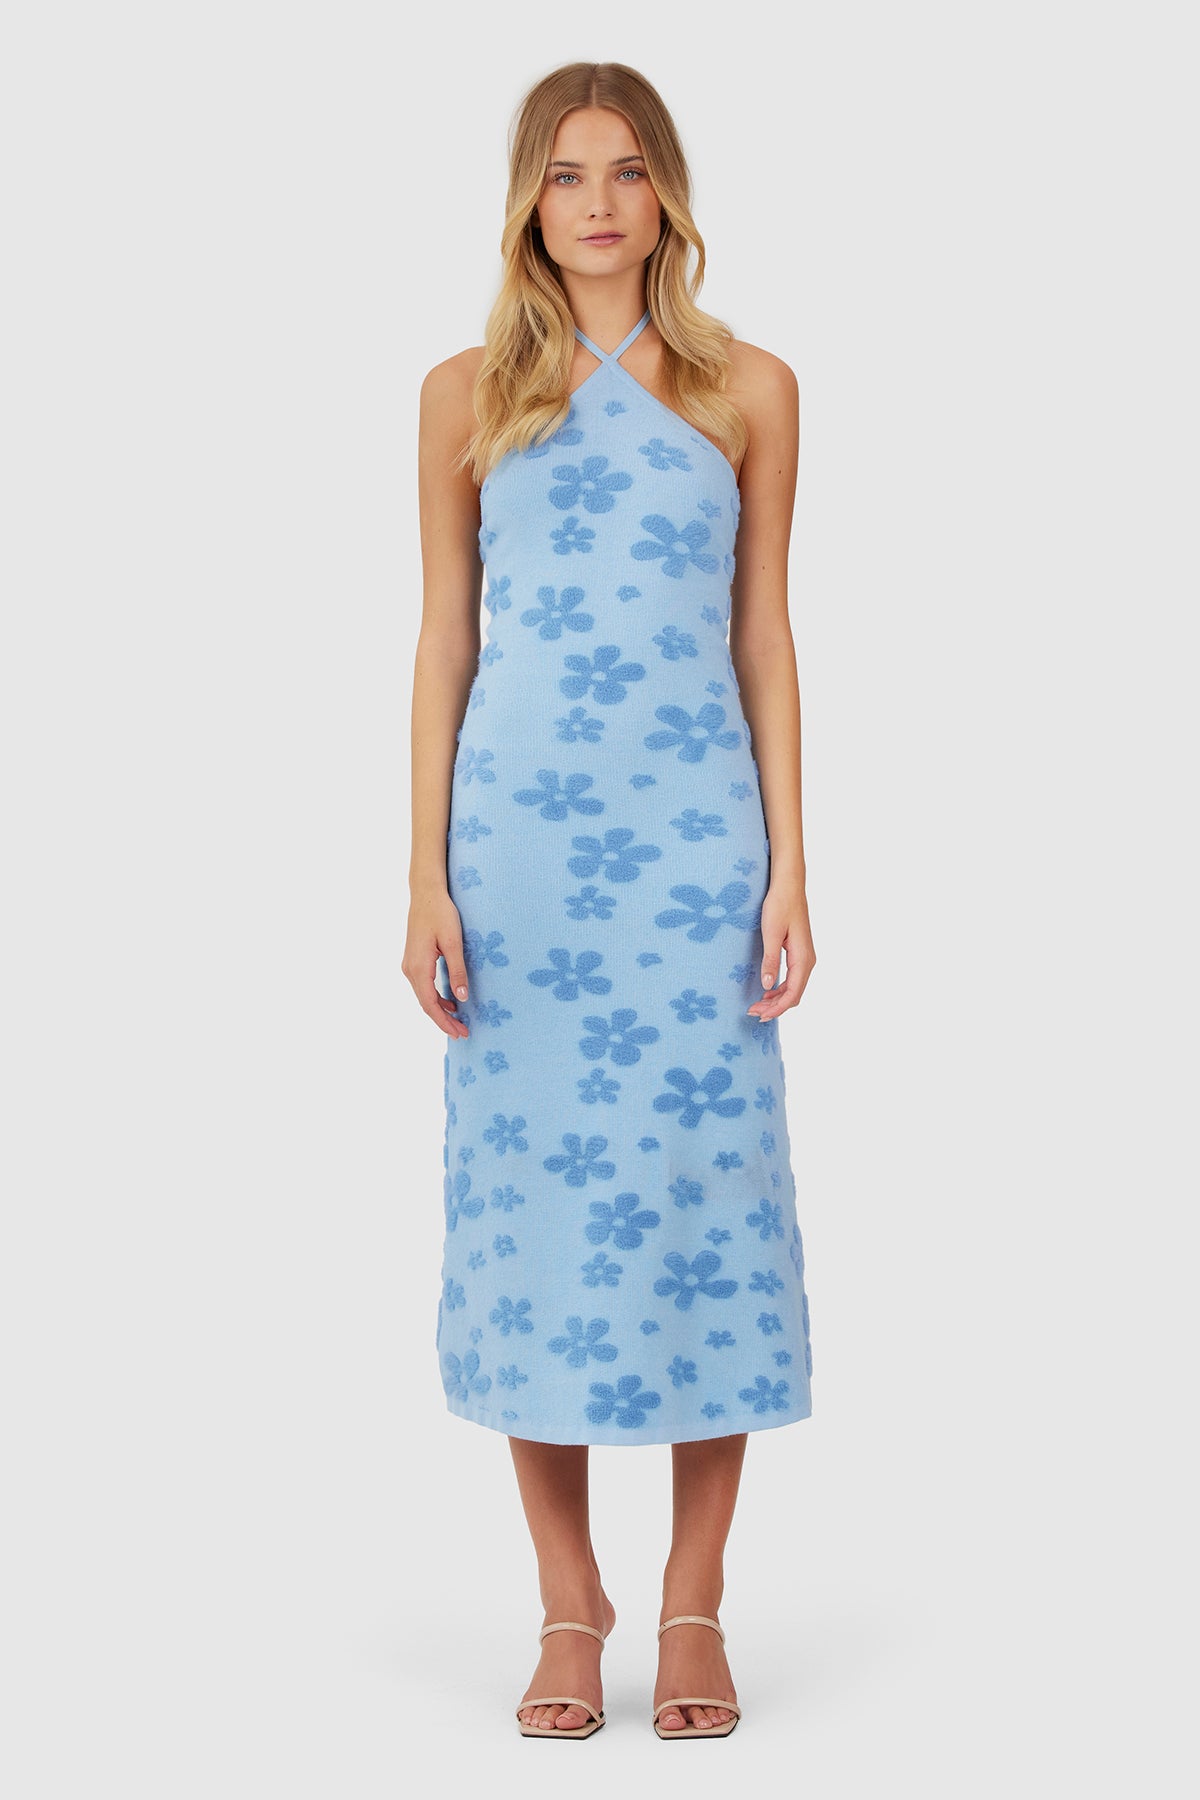 Finders - Poppy Dress - Blue Floral